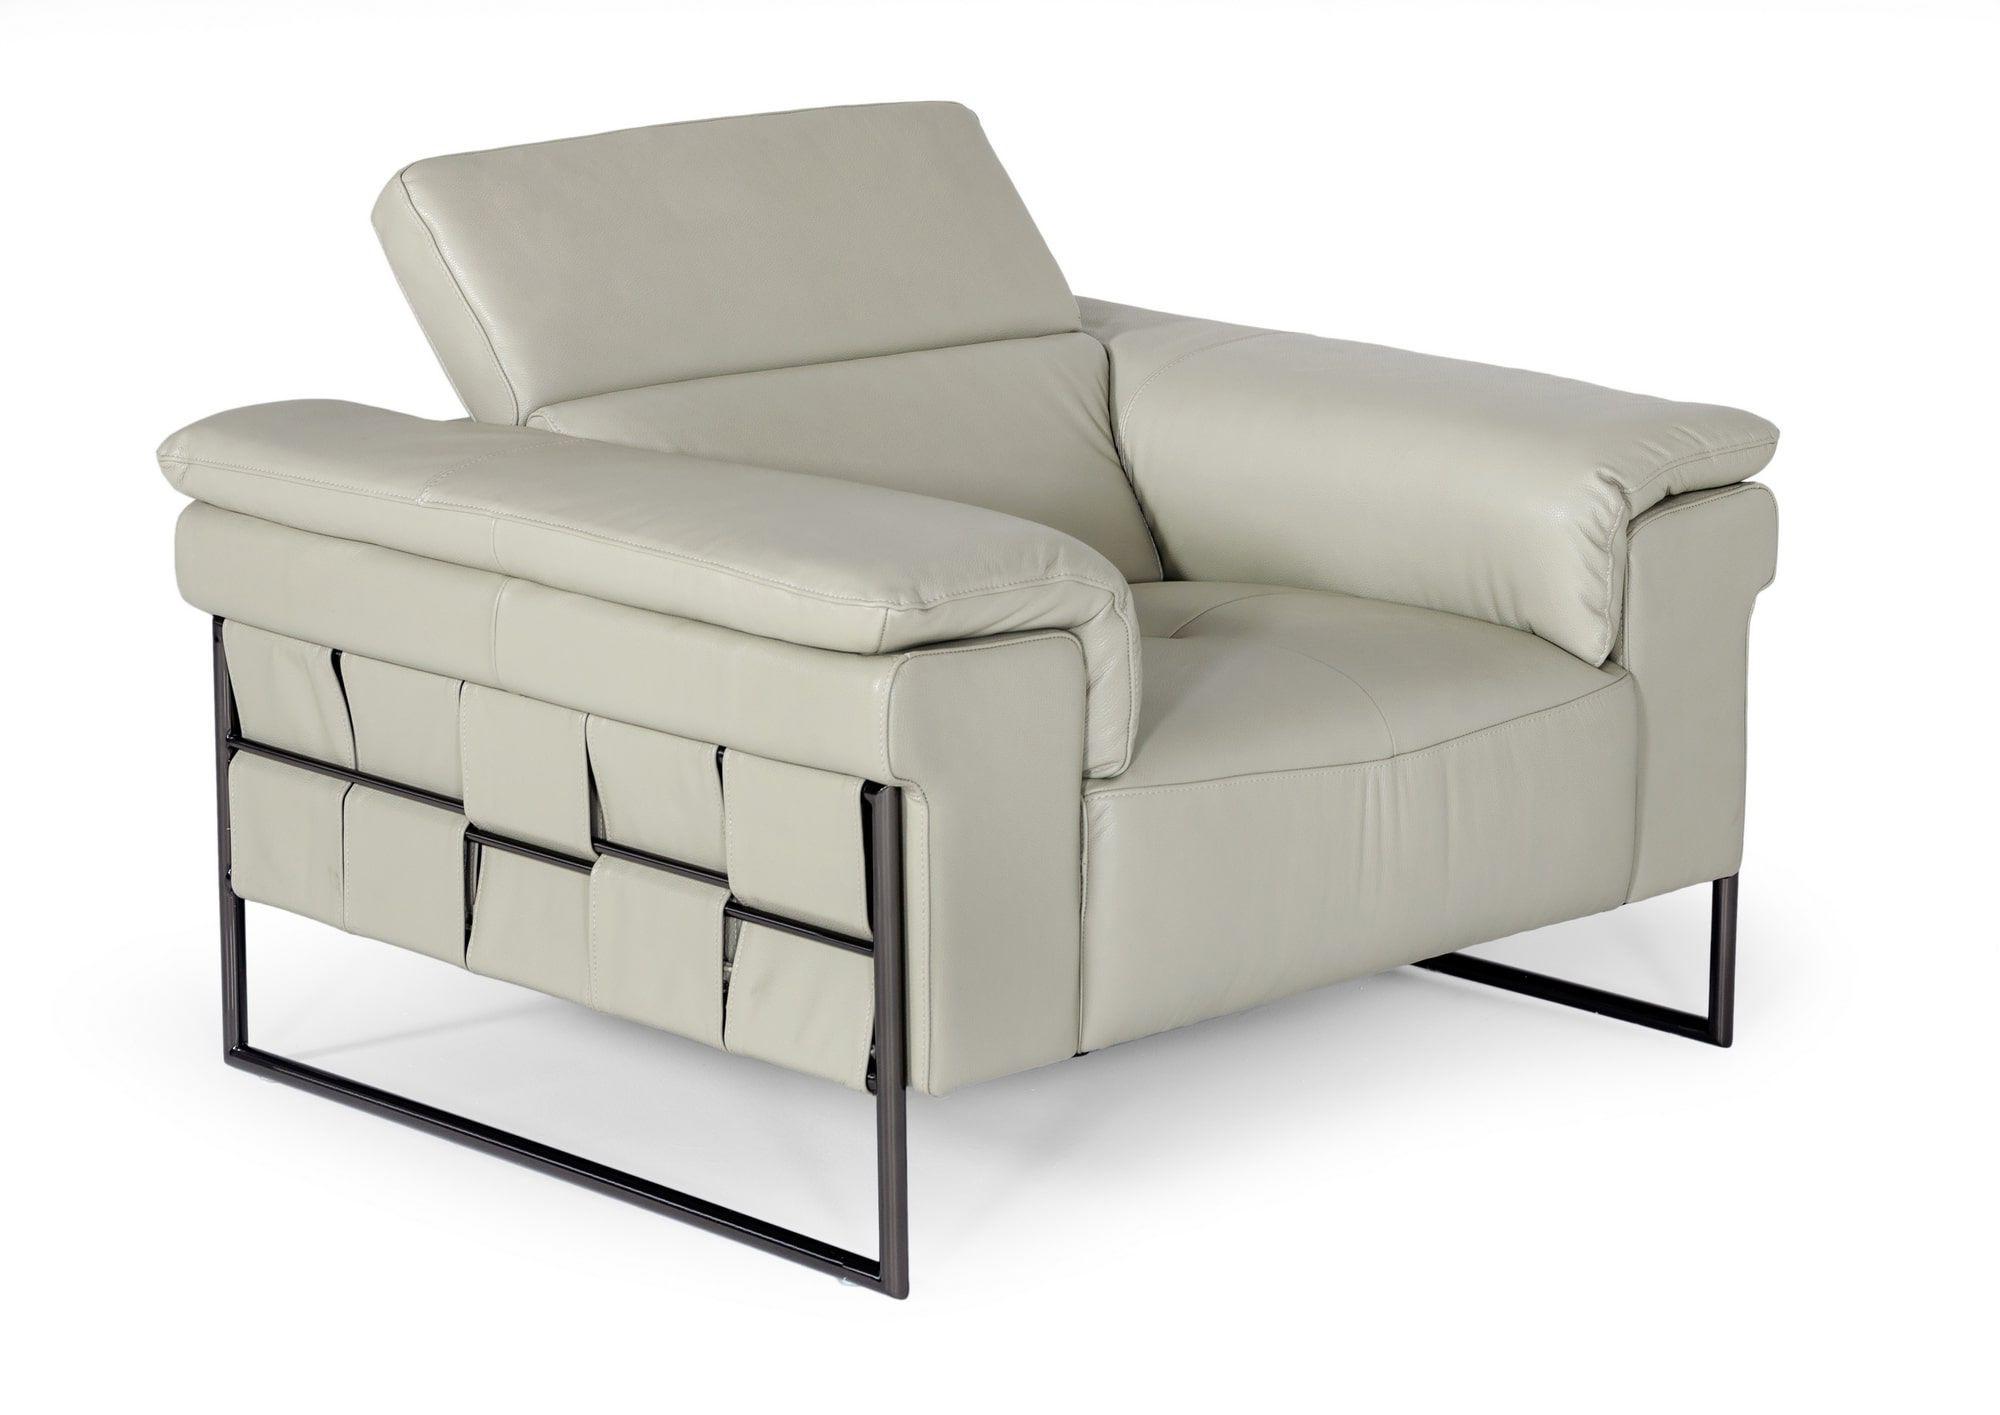 Contemporary, Modern Arm Chair VGEV1858-CH VGEV1858-CH in Light Grey Leather